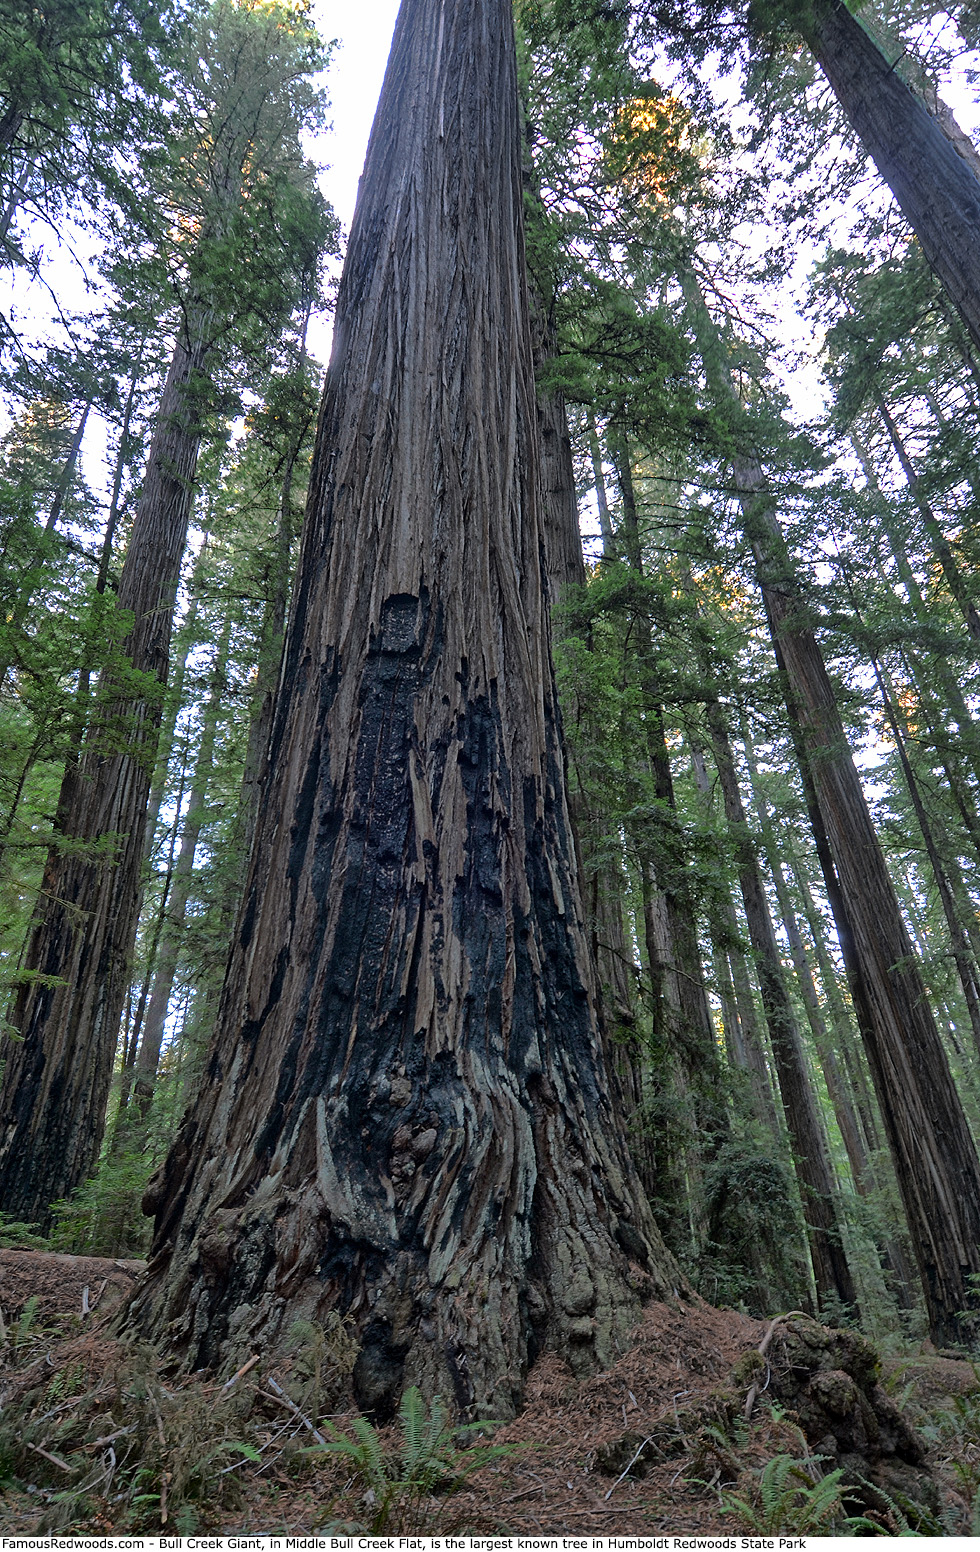 Humboldt Redwoods State Park - Bull Creek Giant Tree